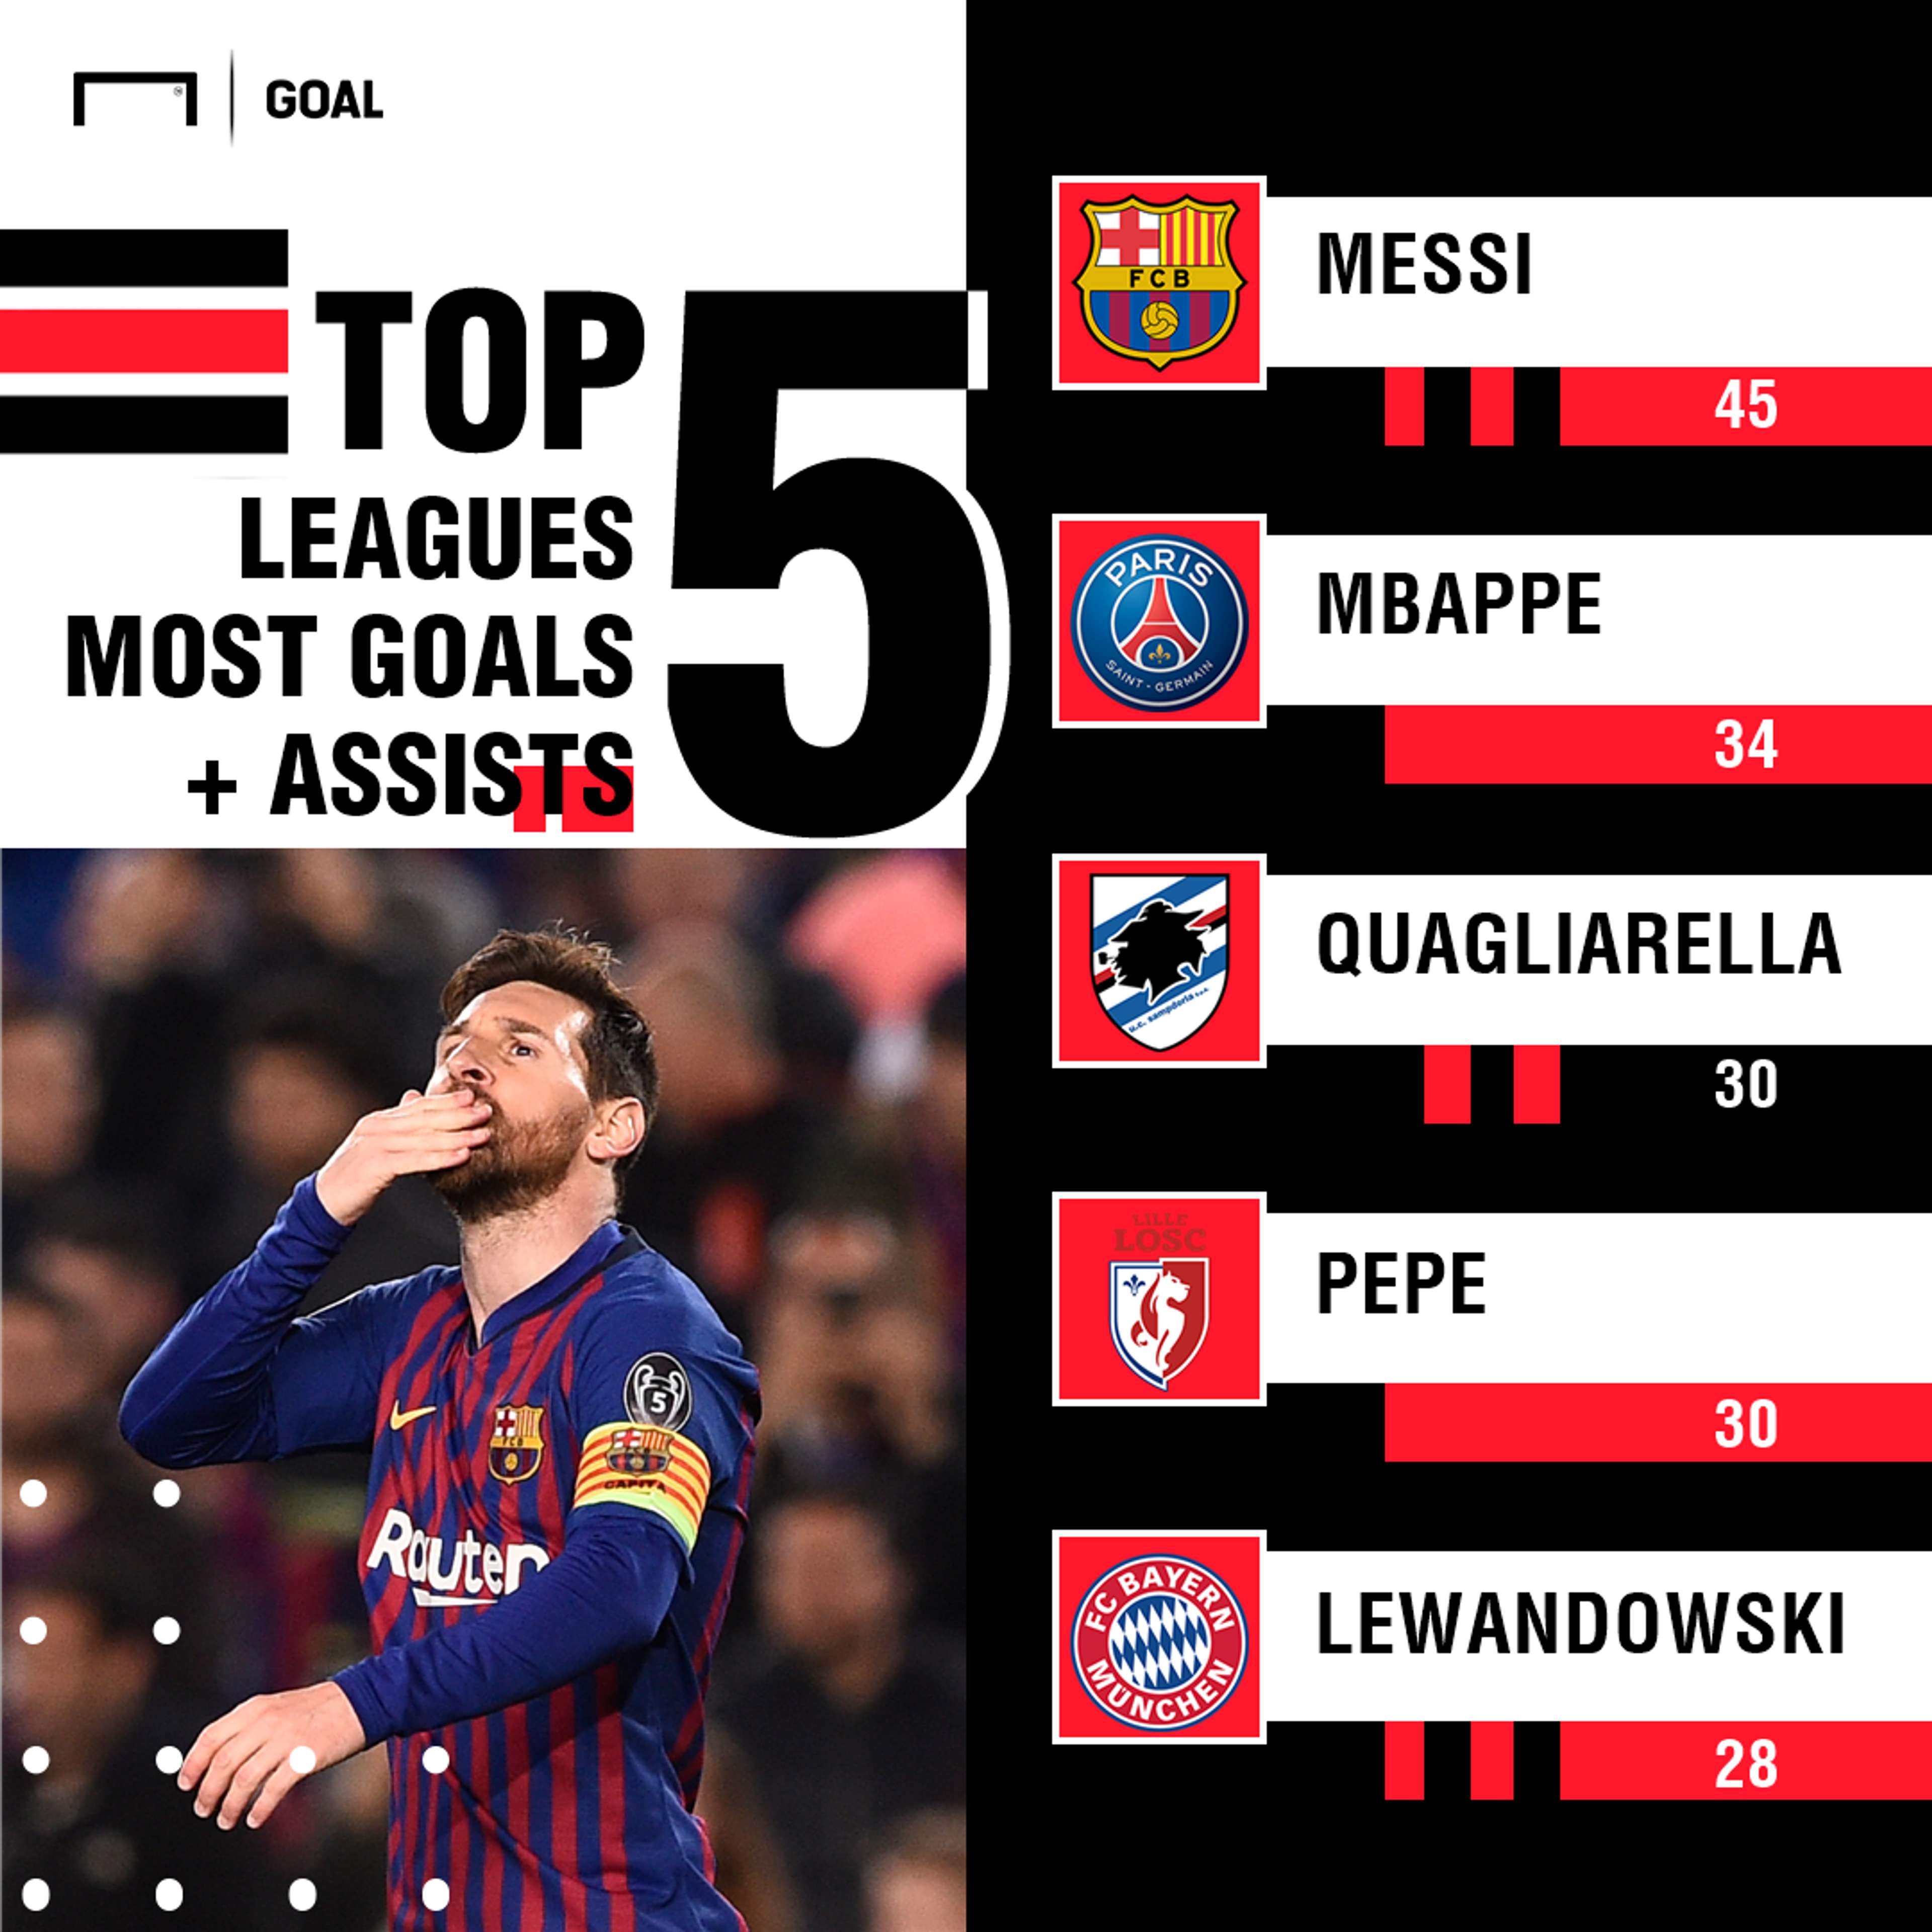 Top 5 G+A Messi